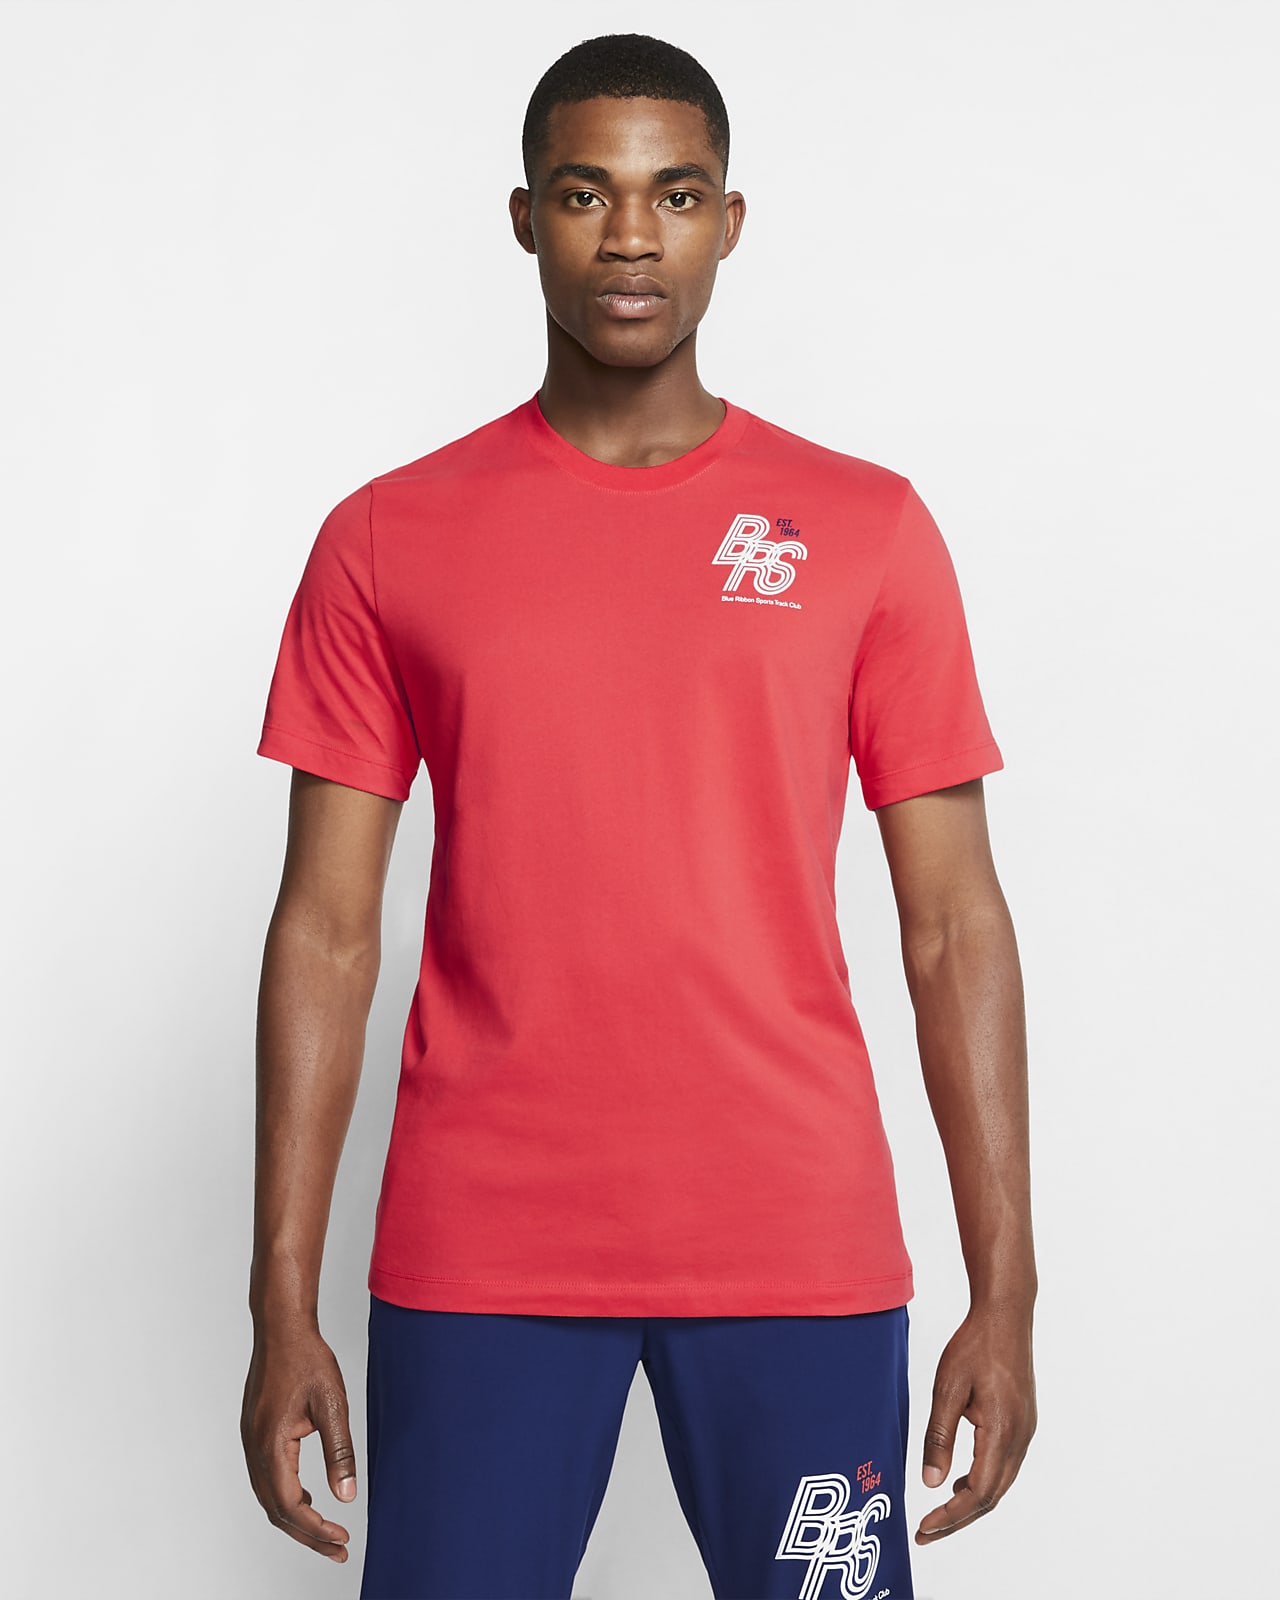 Izkljucno Stisnjen Mosko Nike Sport Tshirt Mcplayrec Org